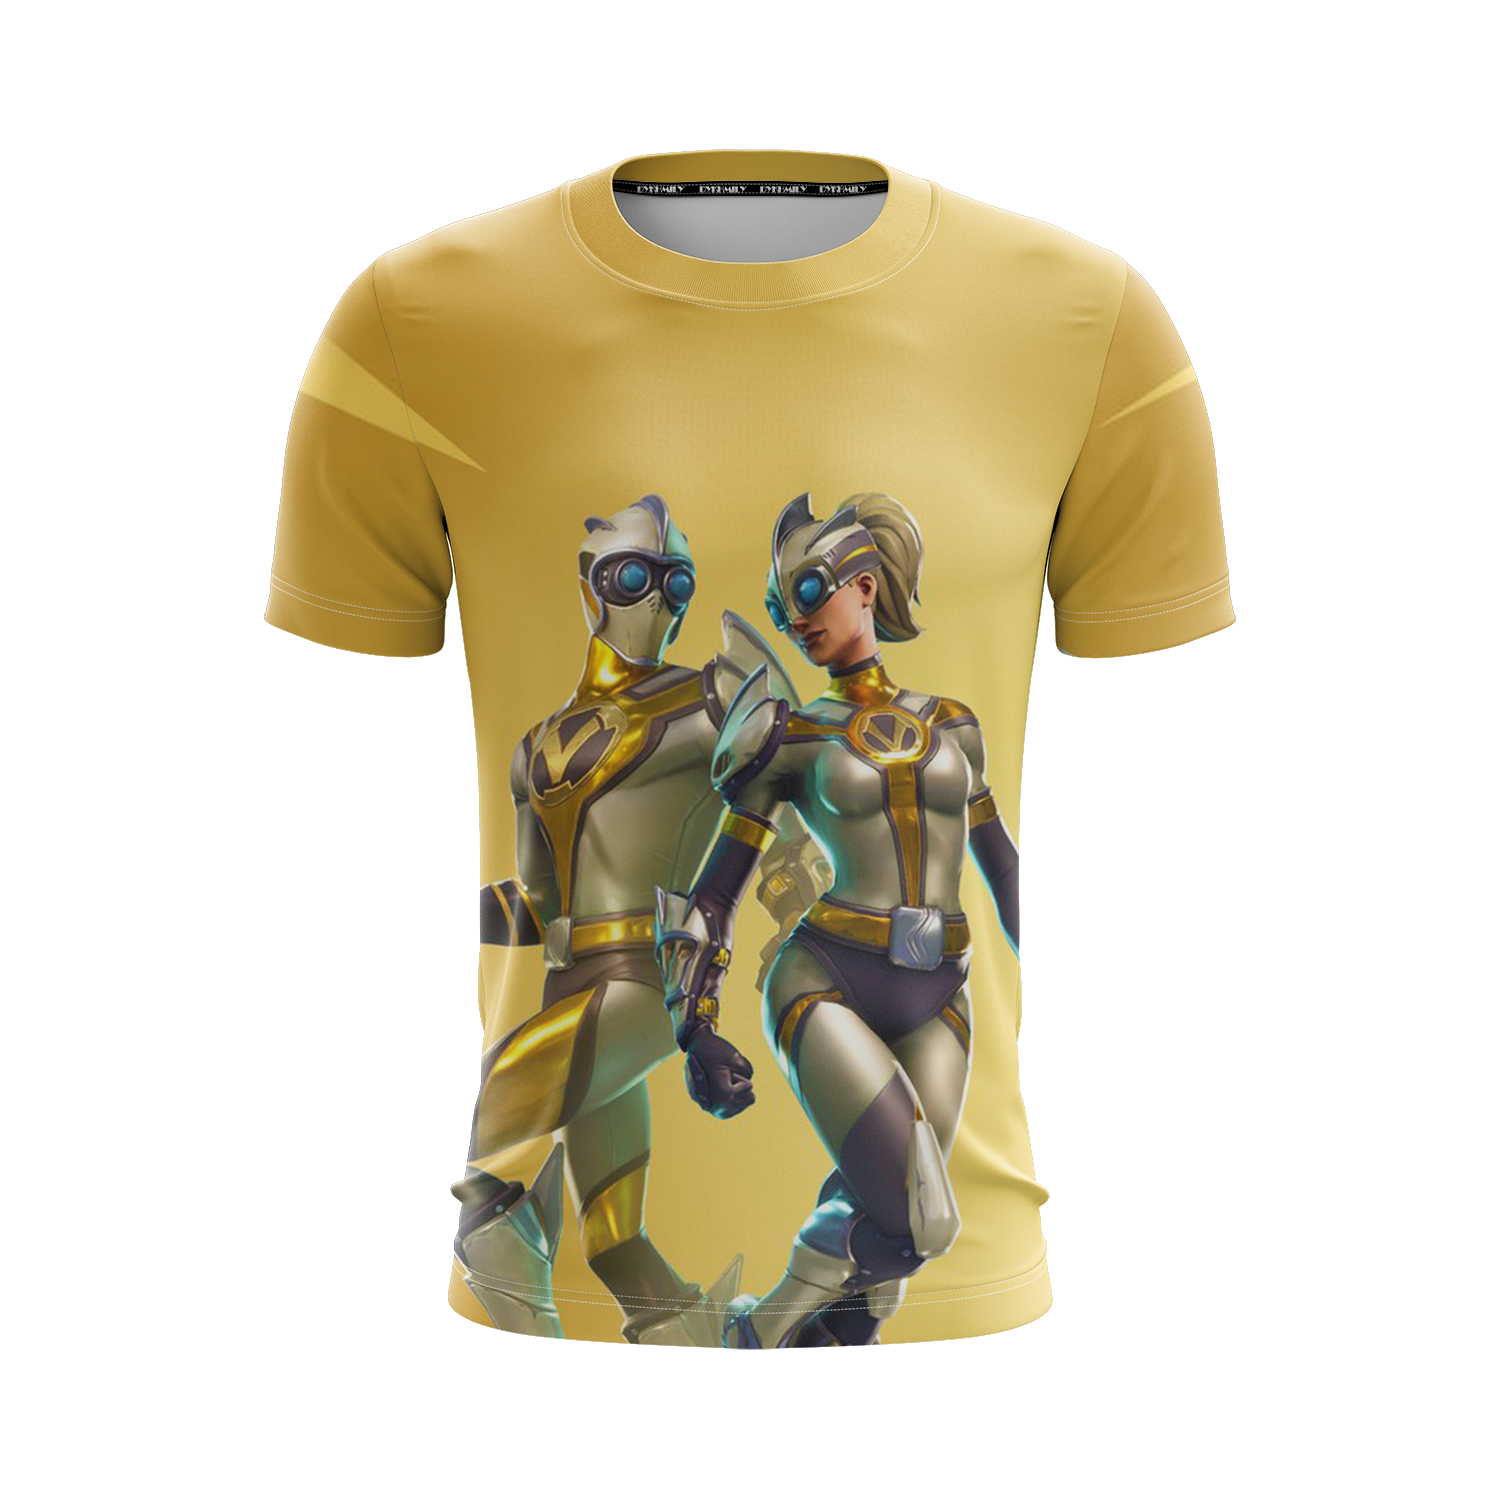 Fortnite Battle Royale Venture & Venturion Epic Skins Unisex 3D T-shirt